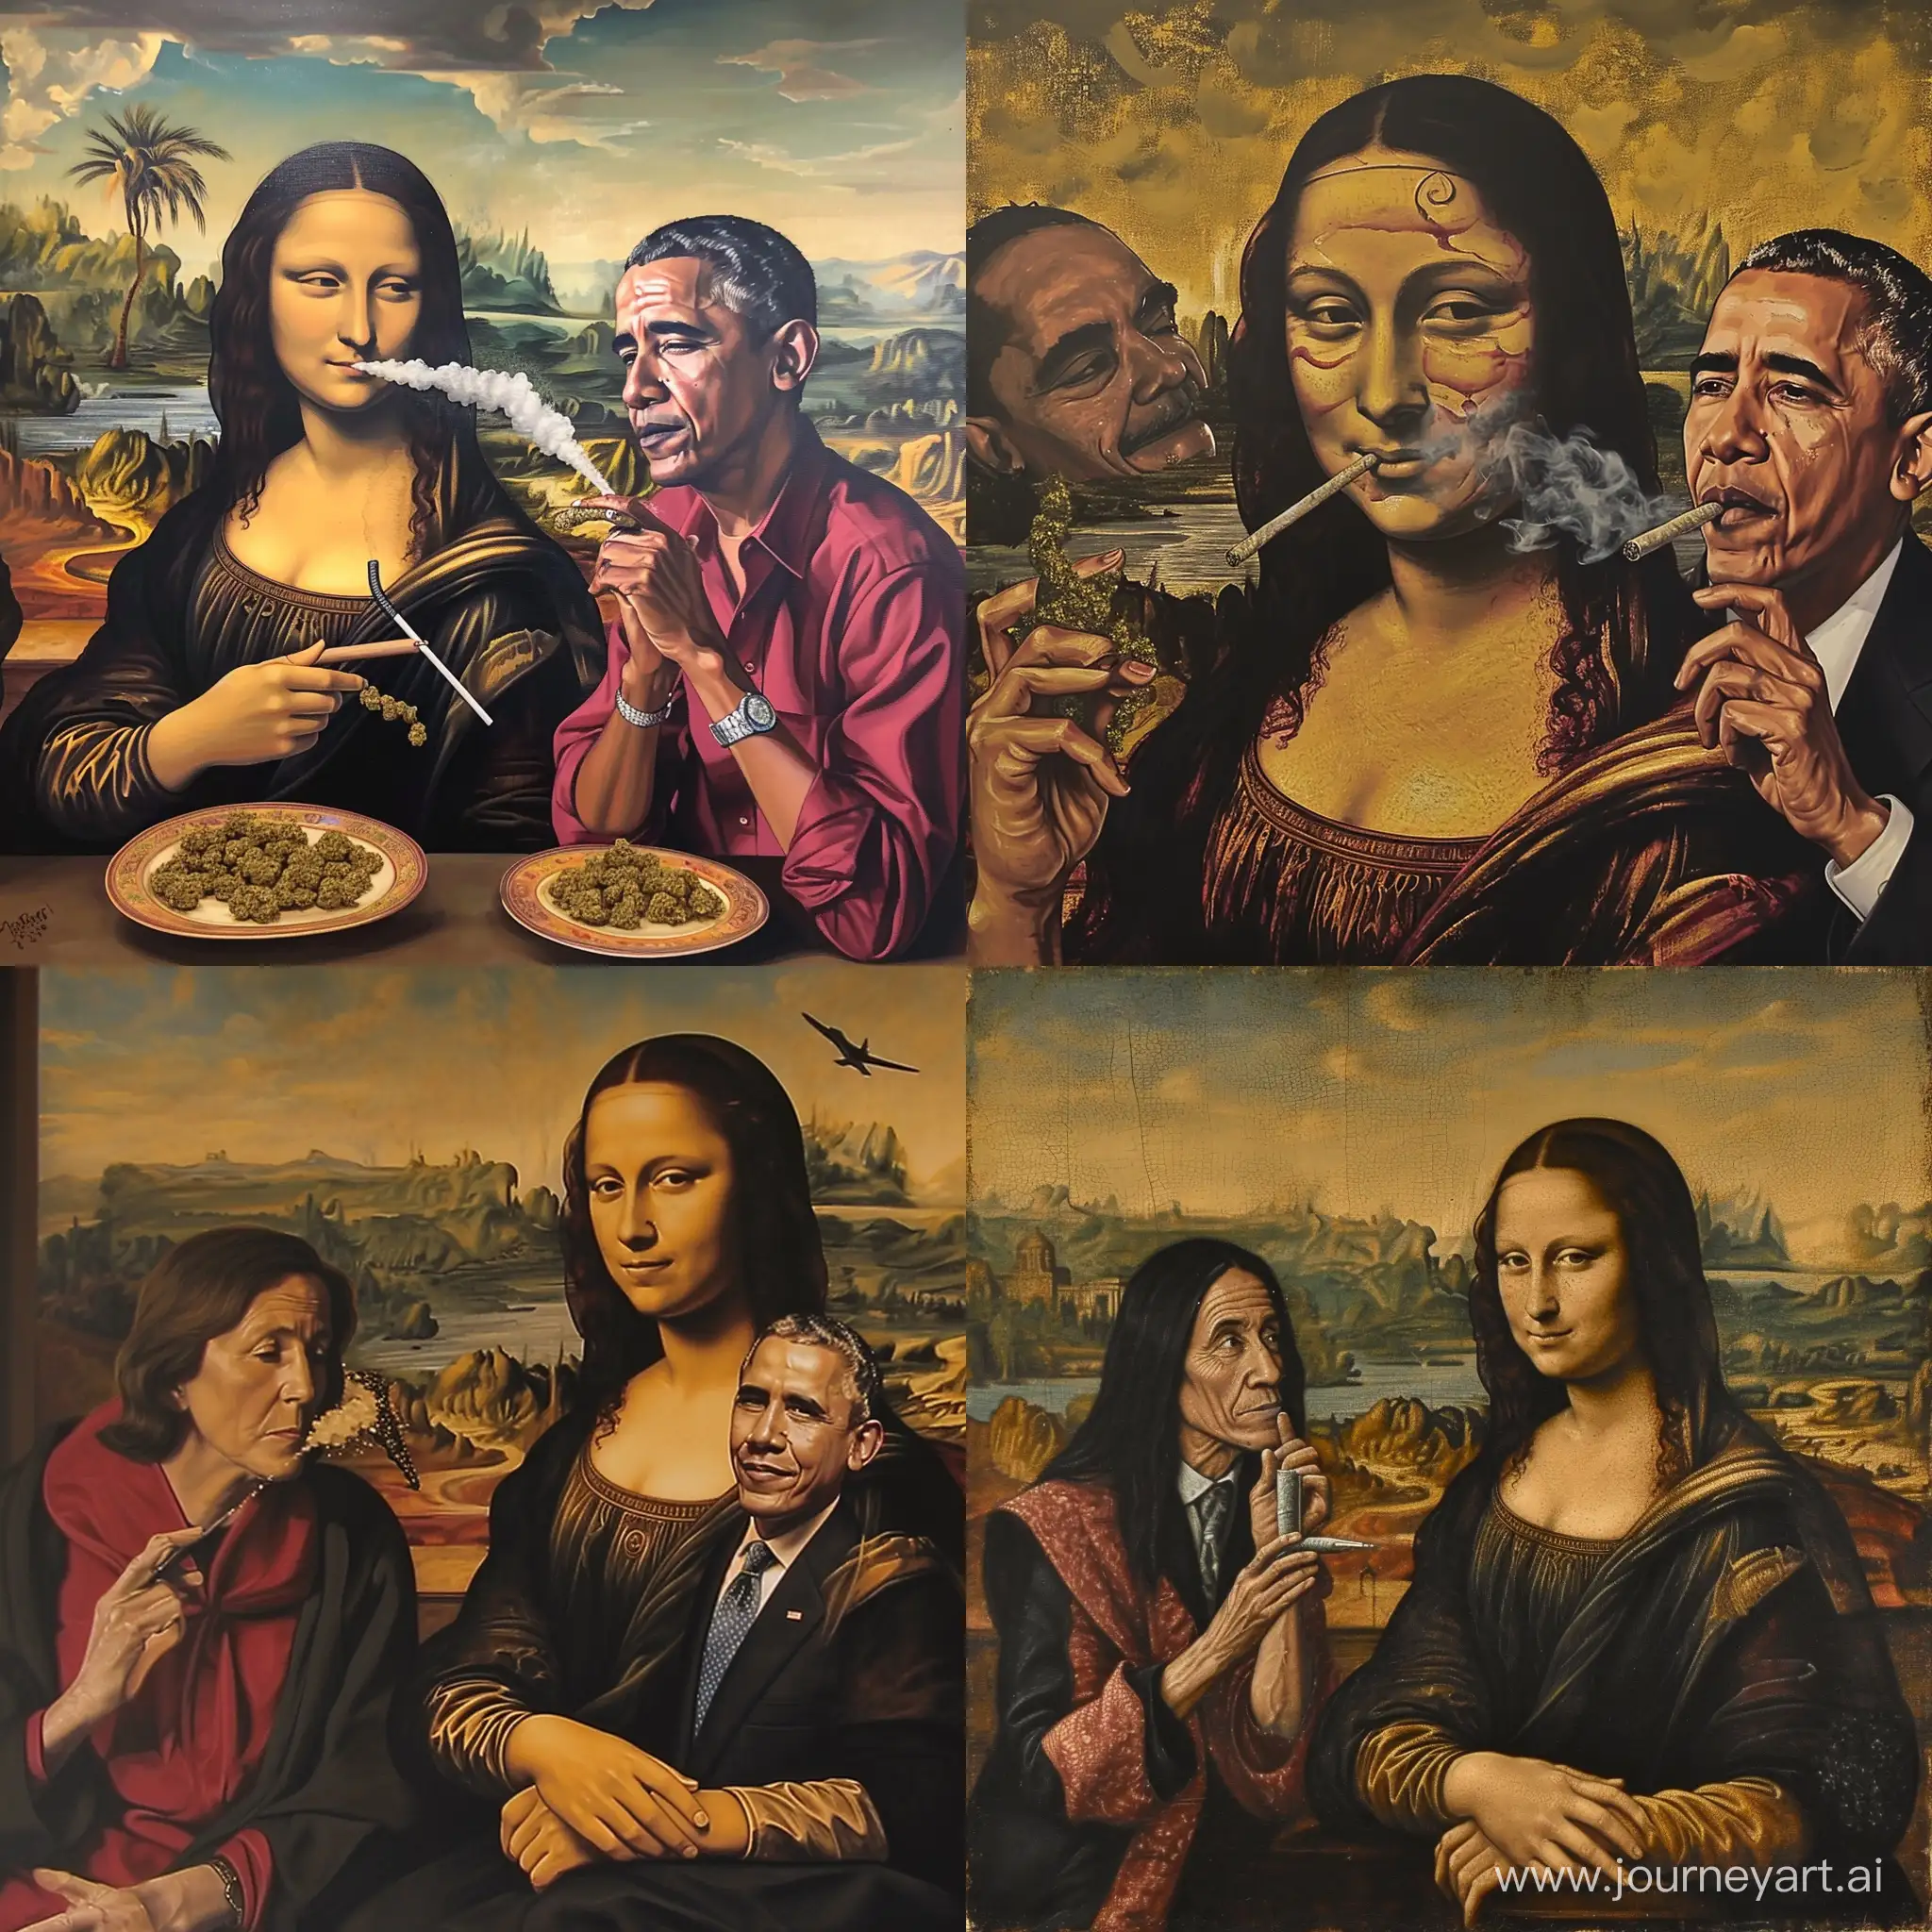 Mona-Lisa-and-Obama-Enjoying-a-Cannabis-Moment